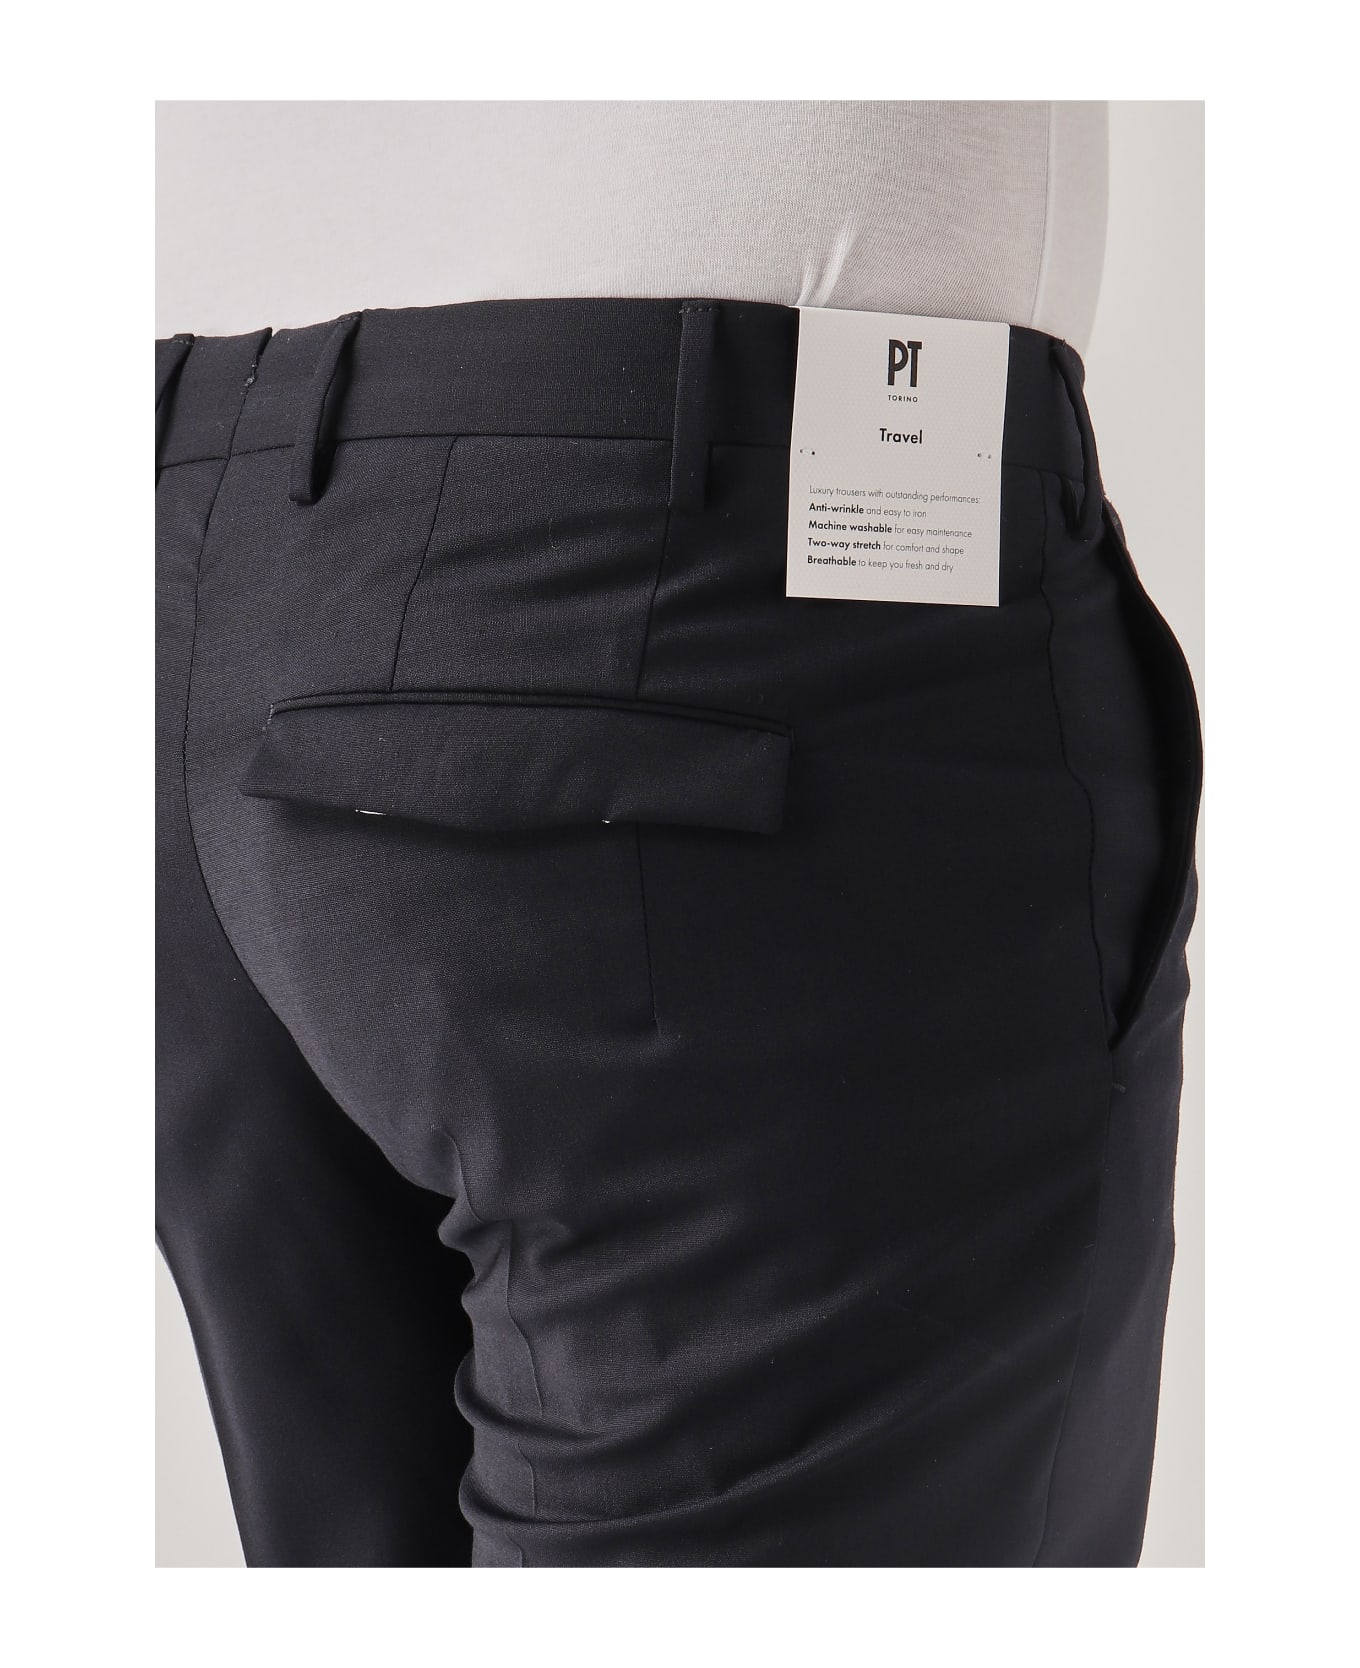 PT01 Pantalone Uomo Trousers - NAVY